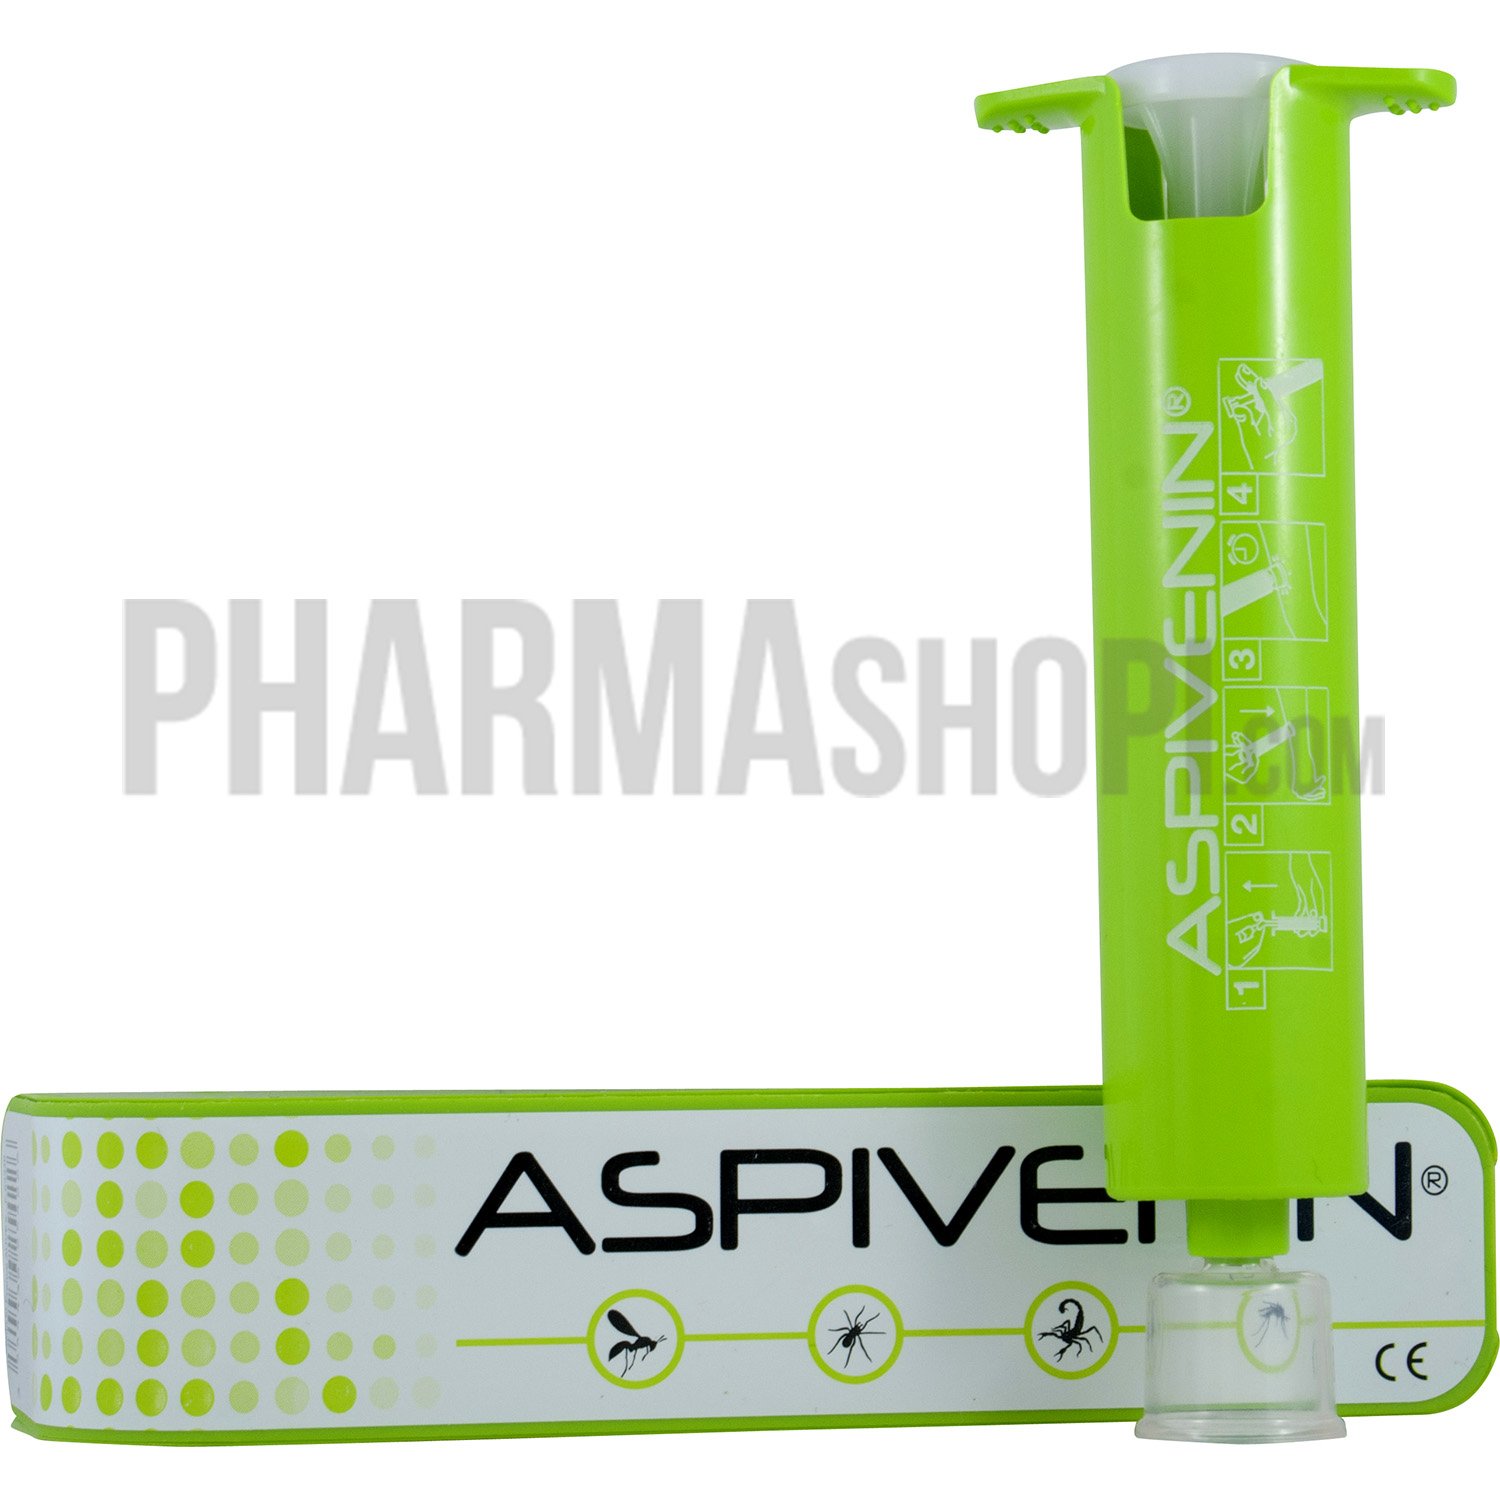 Aspivenin geste d'urgence anti-venin, kit d'une pompe